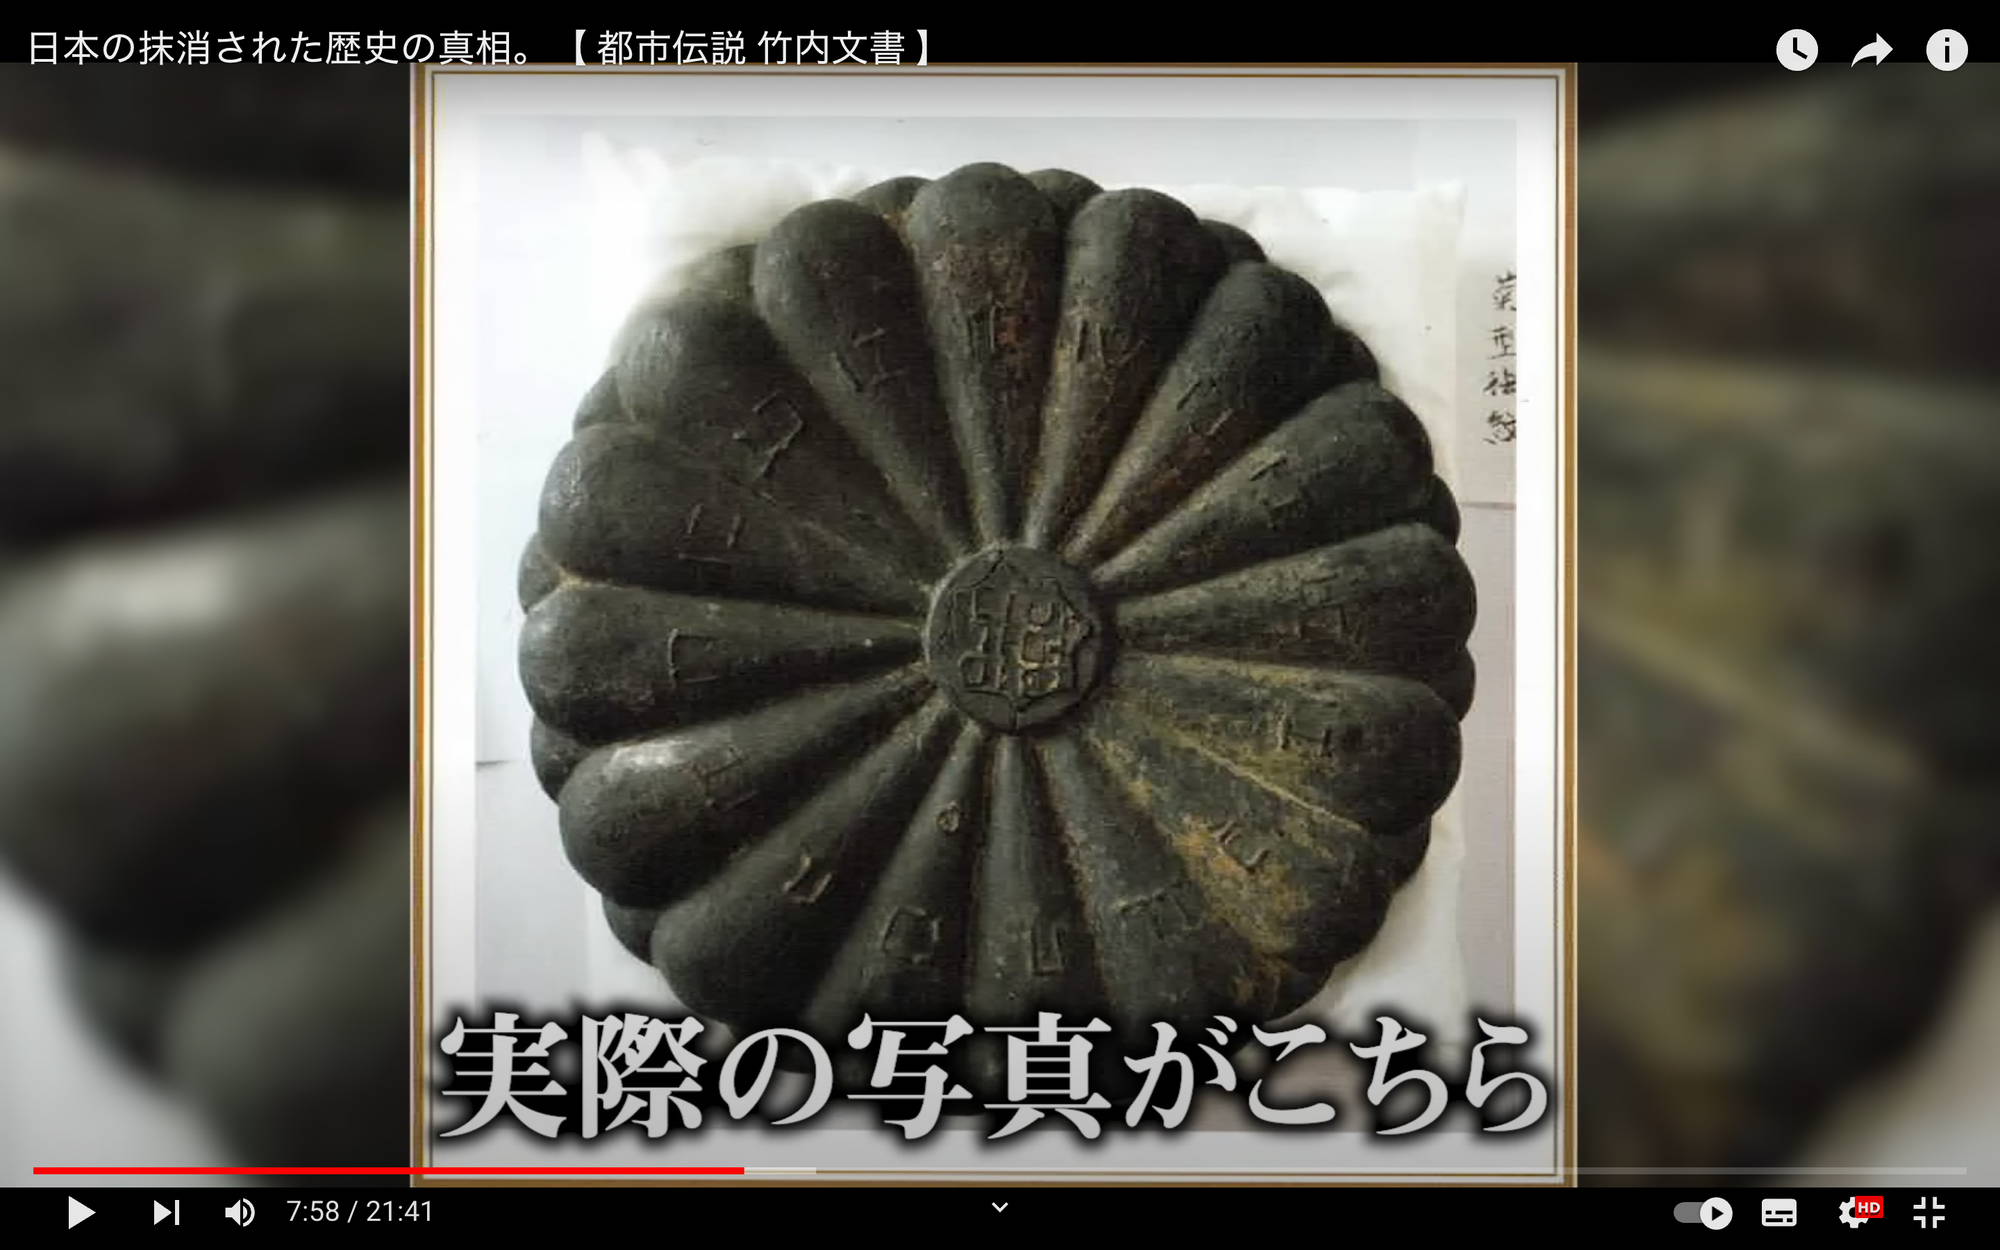 Koso Kotai Shrine and the Takenouchi Documents